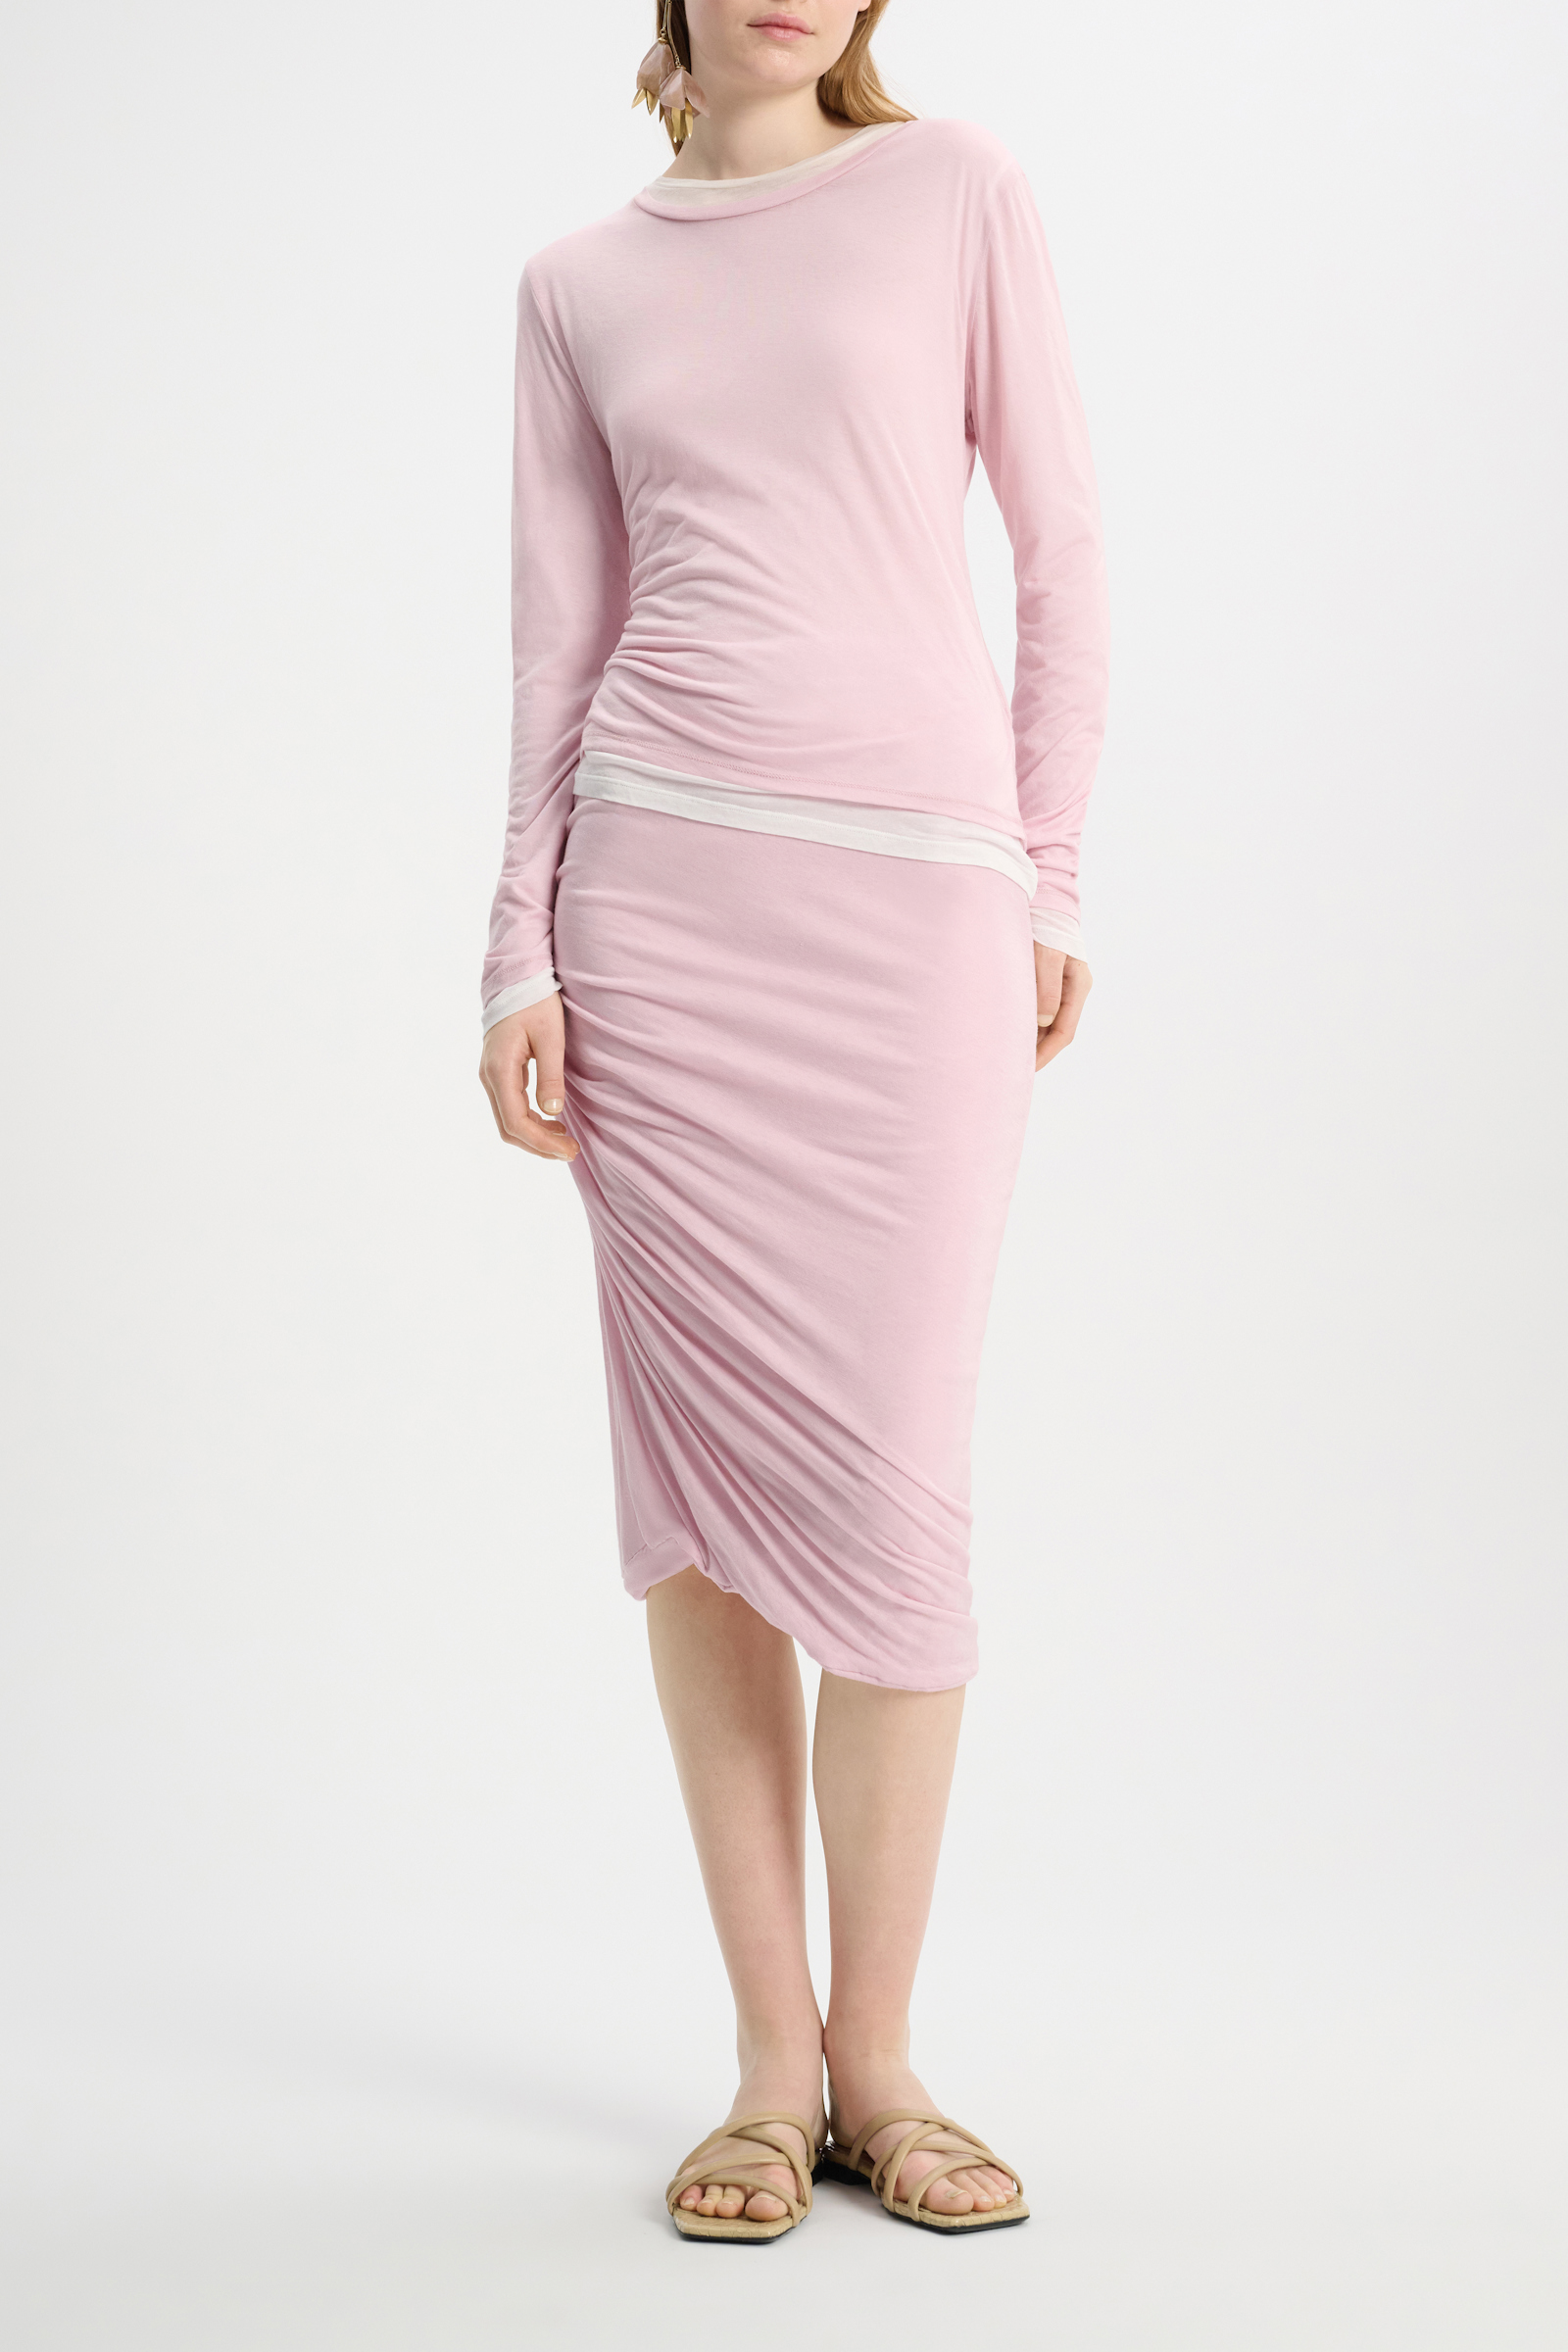 Dorothee Schumacher Three-layer, fine jersey skirt touch of rose